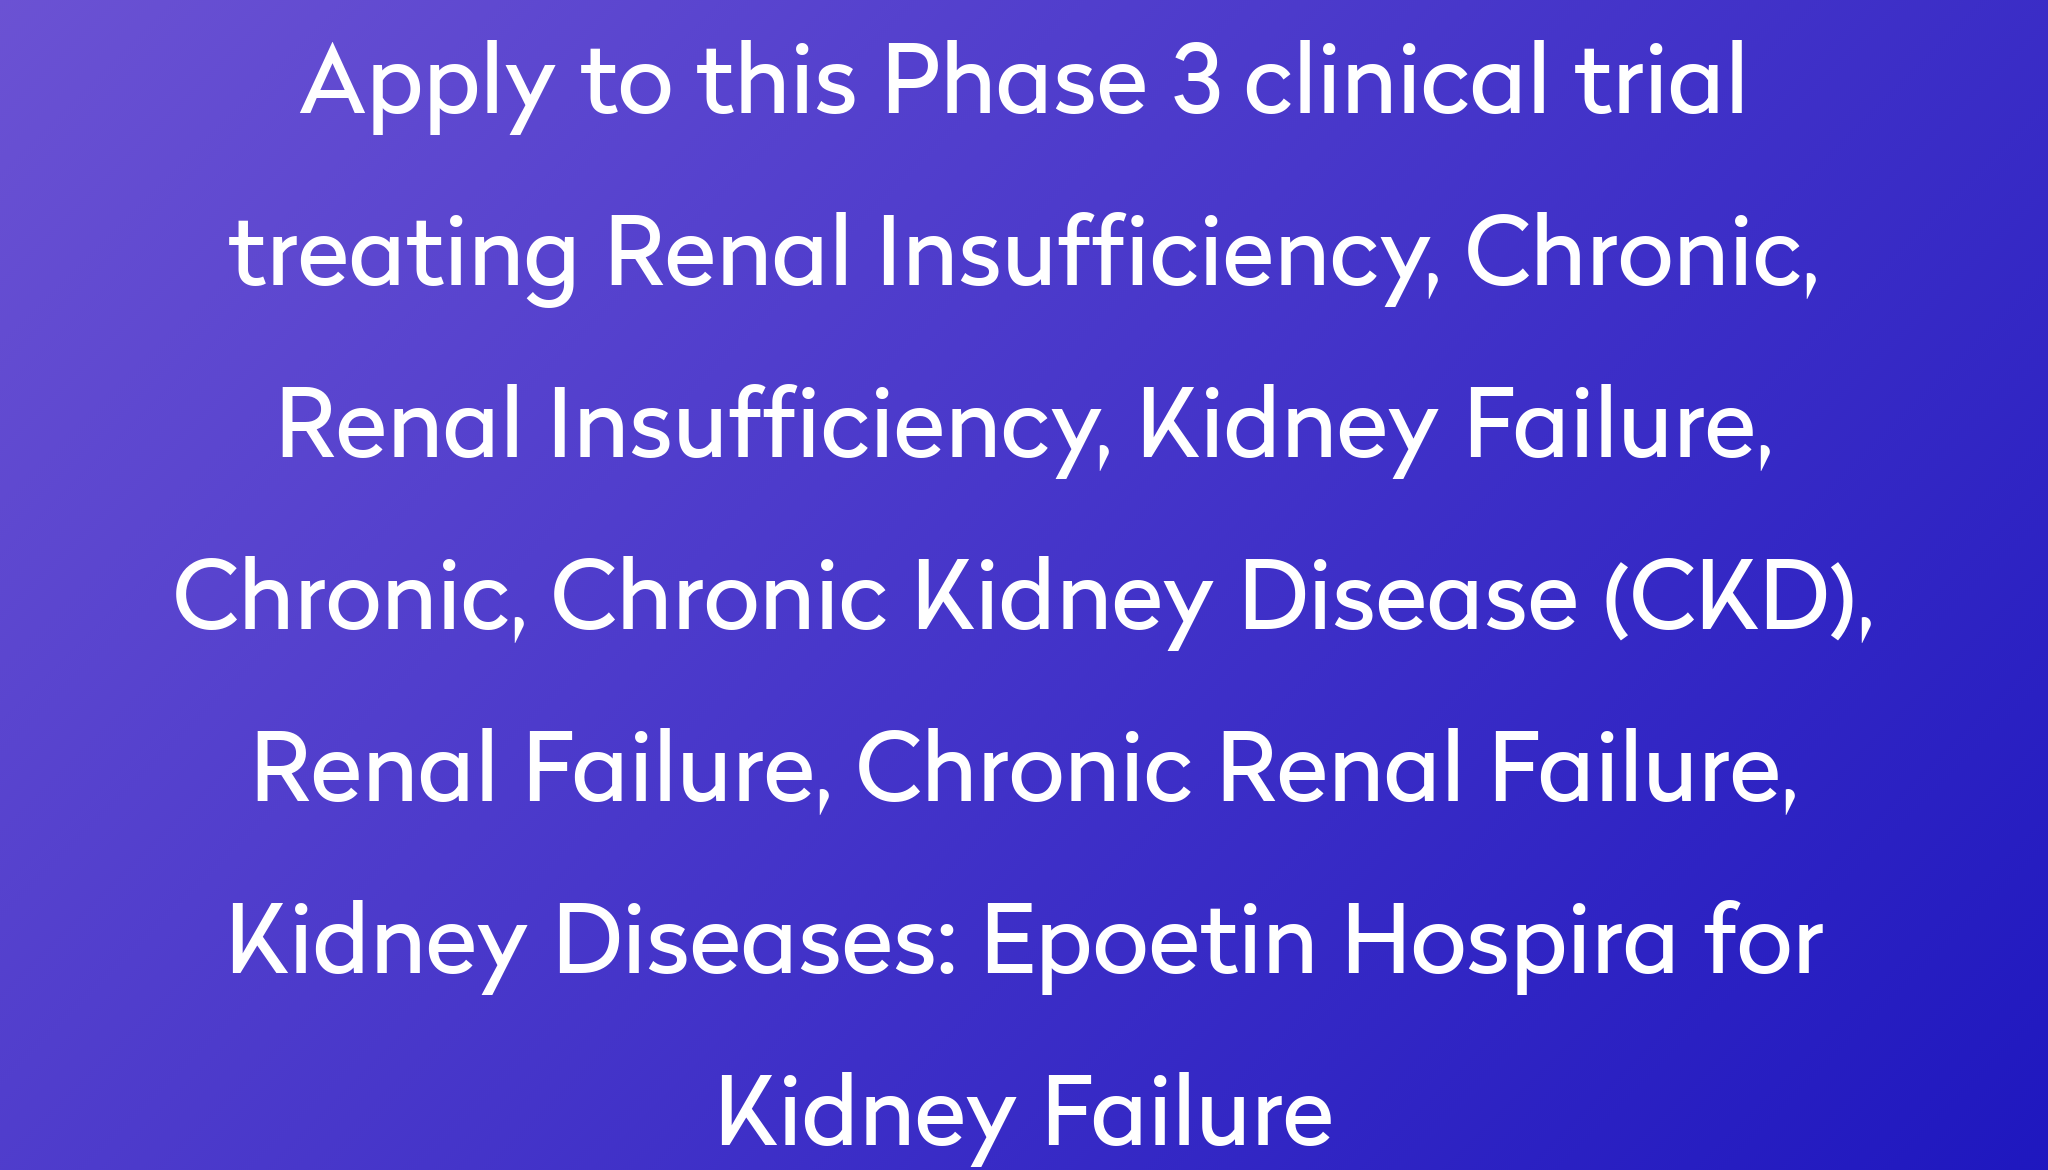 epoetin-hospira-for-kidney-failure-clinical-trial-2022-power